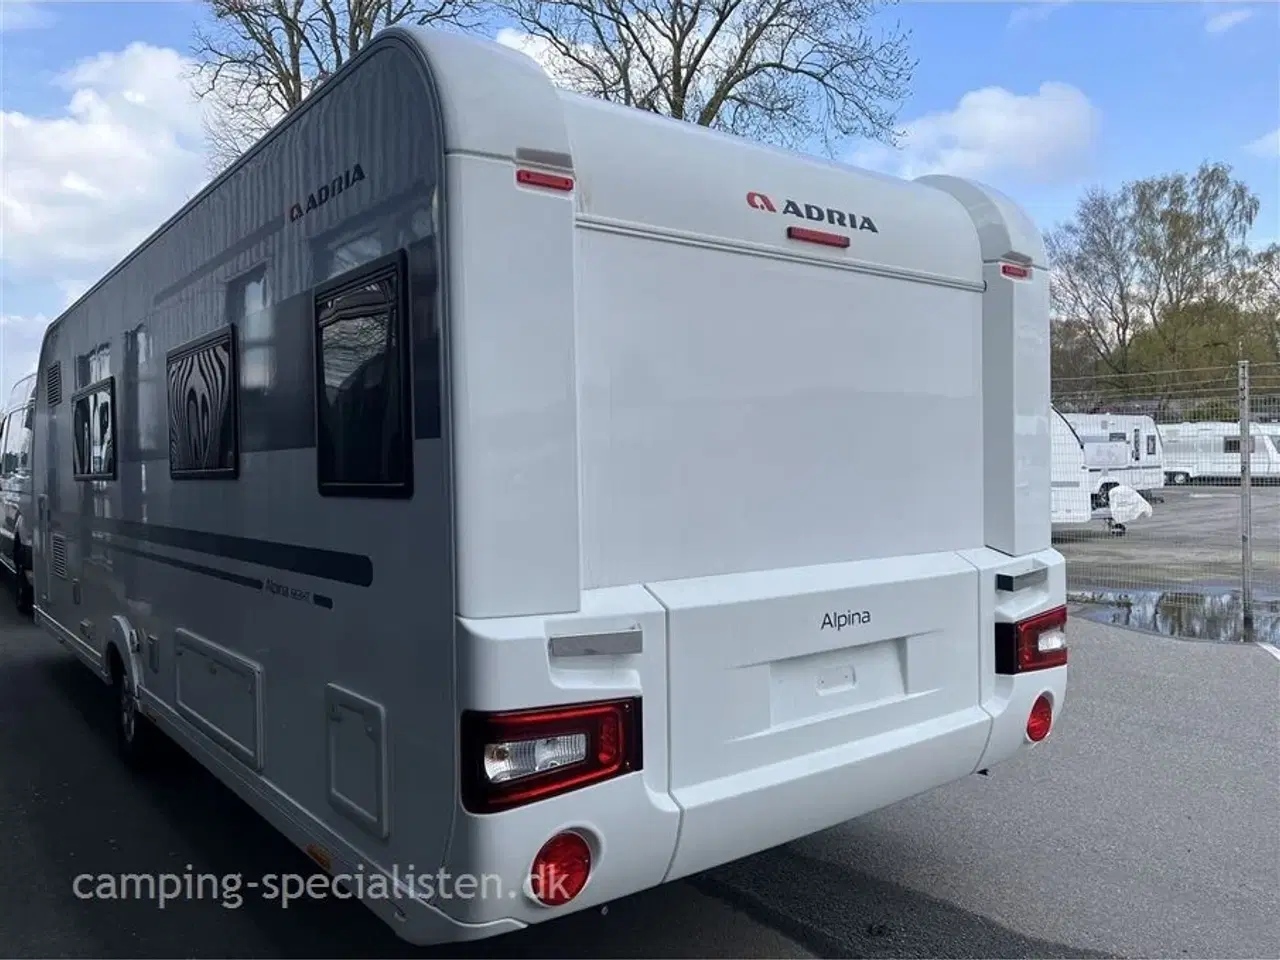 Billede 3 - 2019 - Adria Alpina 663 HT   Adria Alpina 663 HT model 2019 - Queensbed dobbeltseng - kan nu ses hos Camping-Specialisten.dk i Aarhus